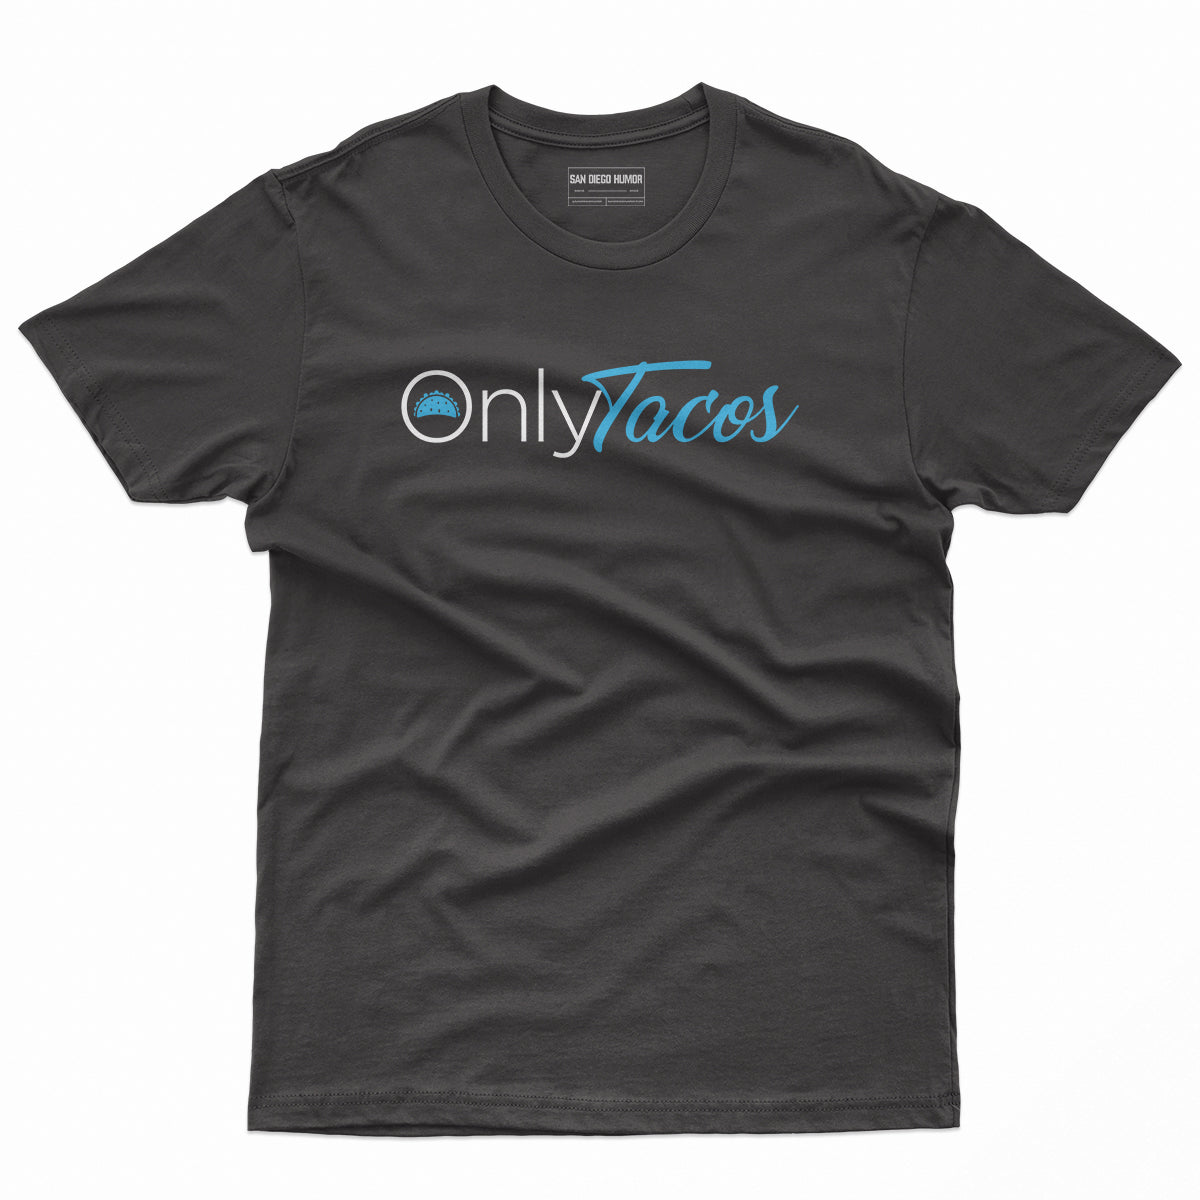 OnlyTacos T-Shirt (Black) - Unisex